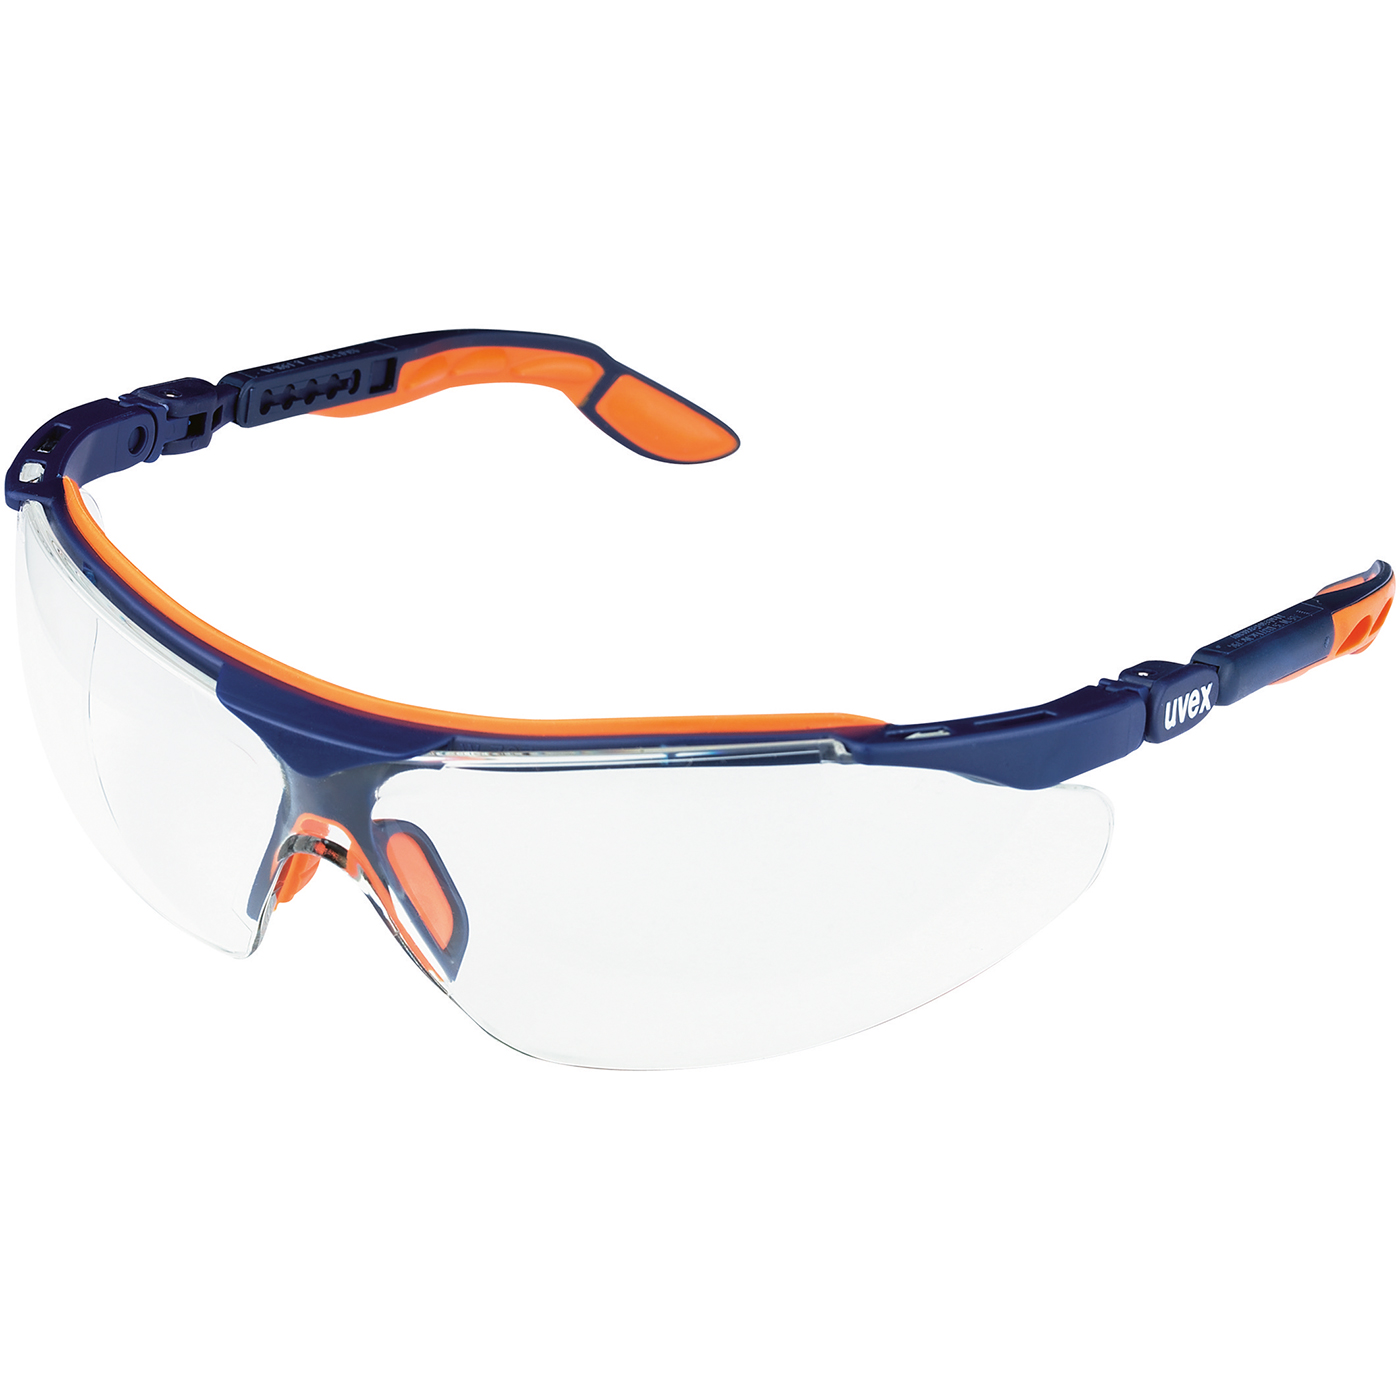 iSpec Comfort Fit Protective Goggles, Transp., Blue/Orange - 1 piece